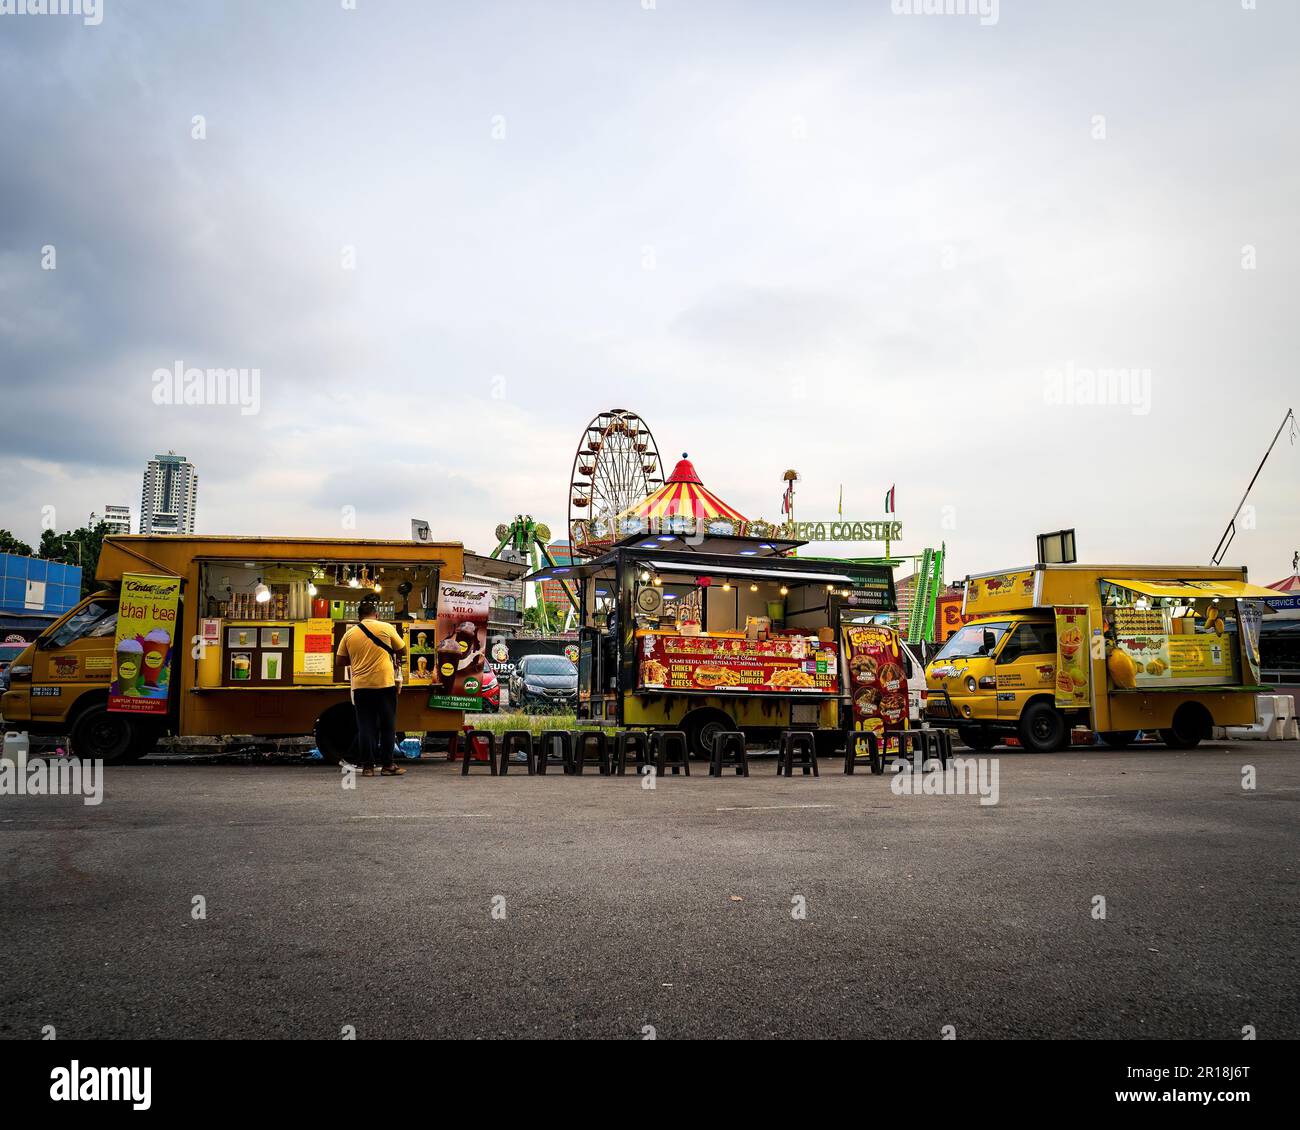 The food trucks selling various selections at the Euro Fun Park fun fair in Bukit Jalil, Malaysia. Stock Photo